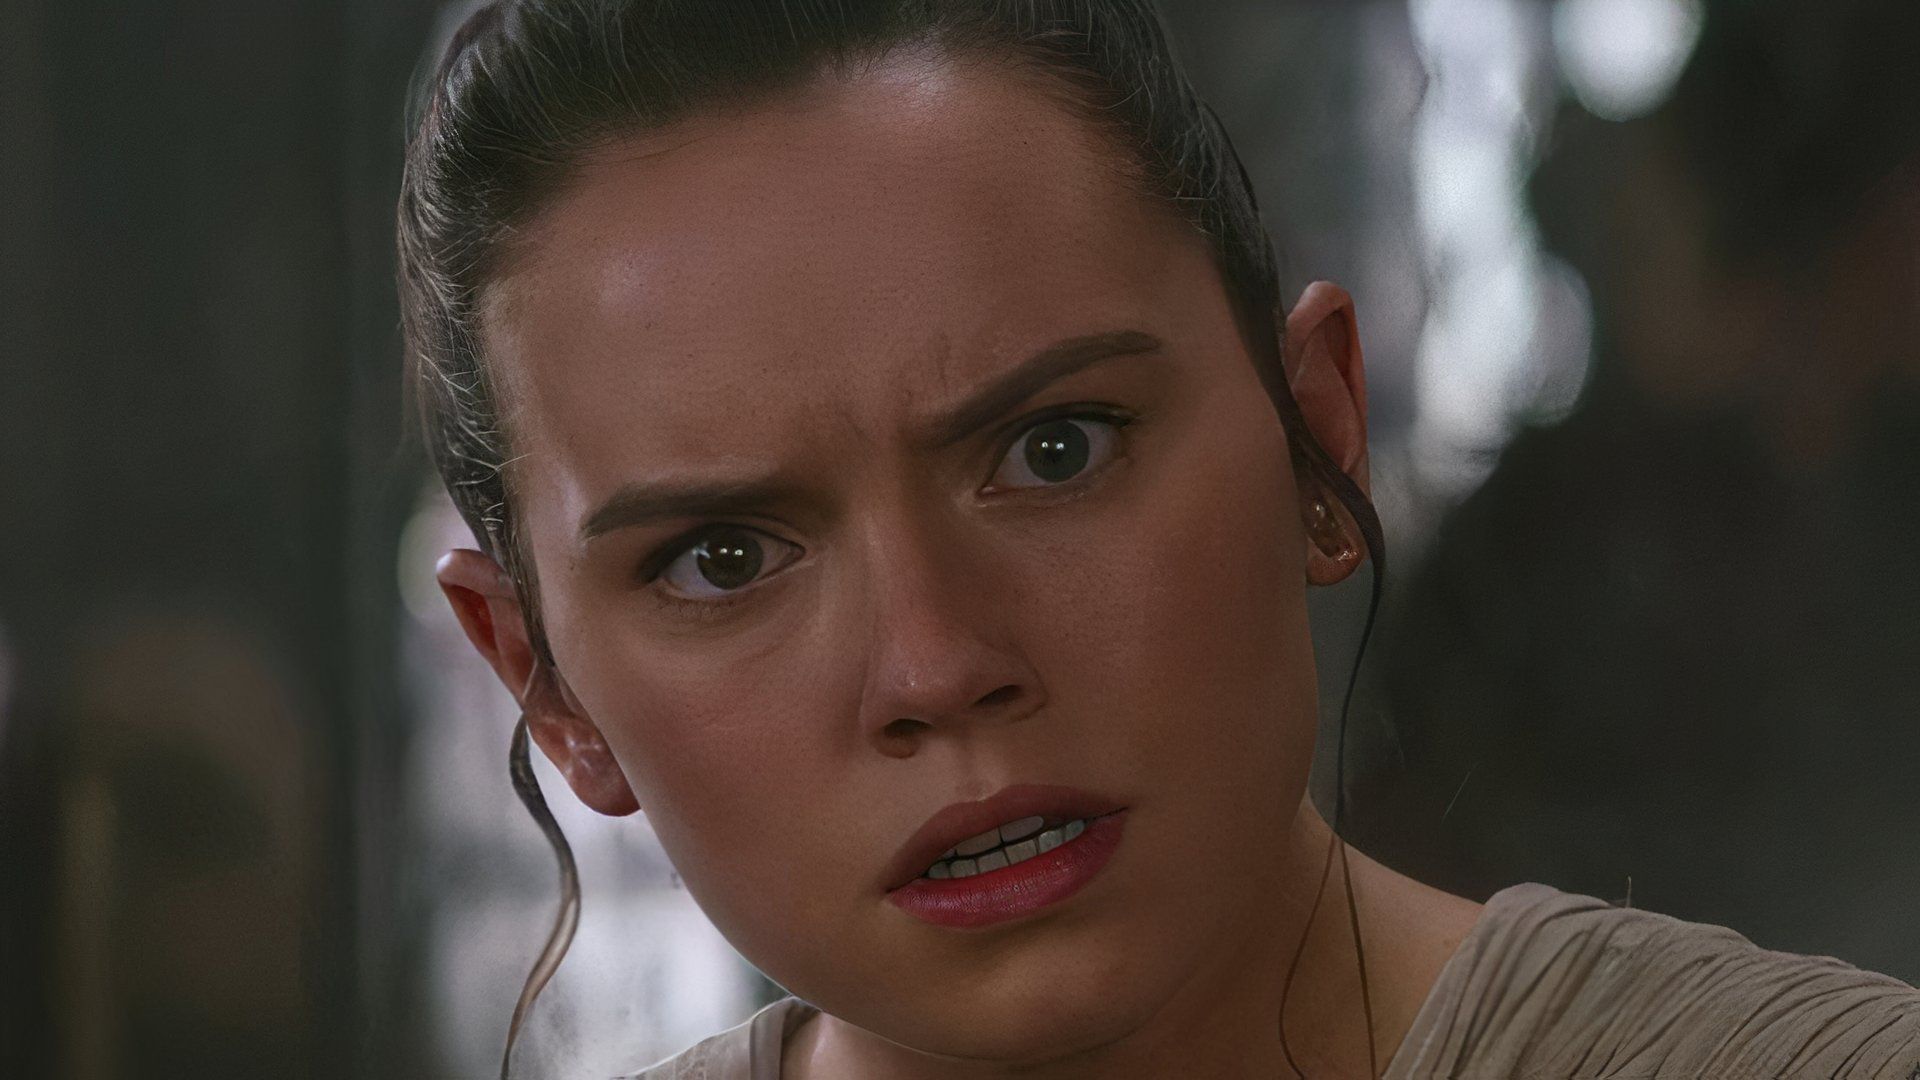 Daisy Ridley as Rey in Star Wars looking worried